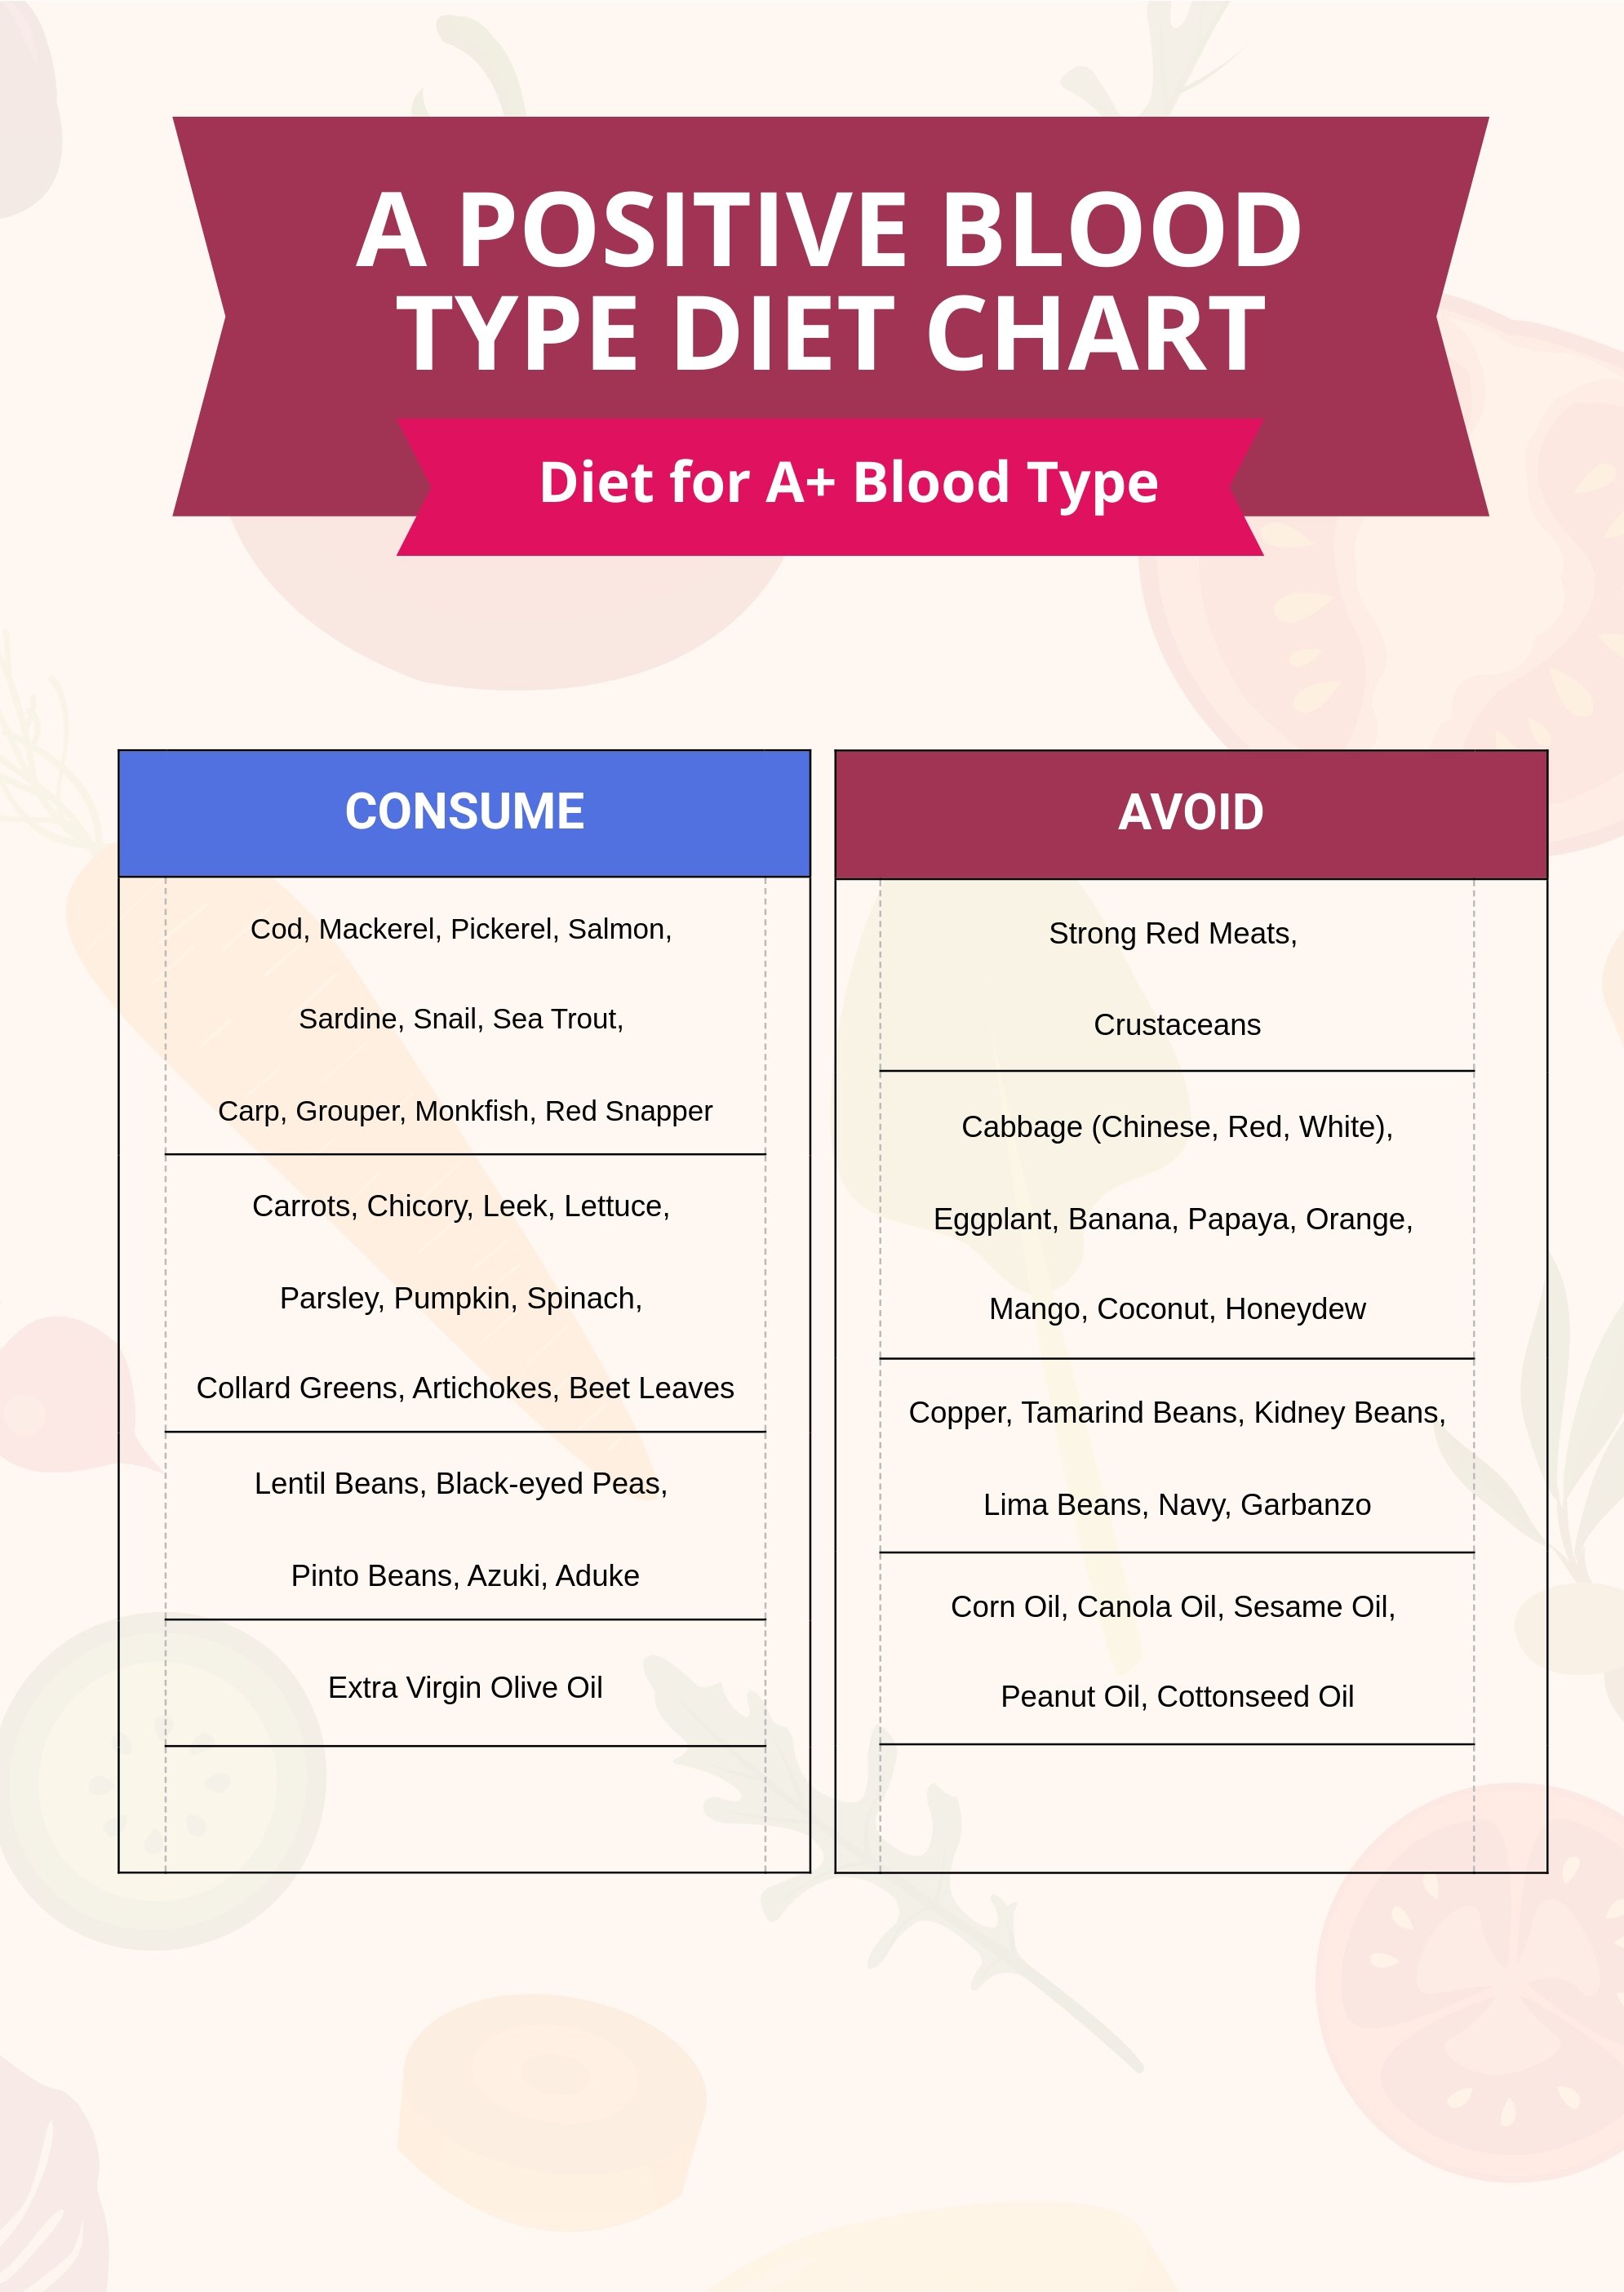 A Positive Blood Type Diet Chart